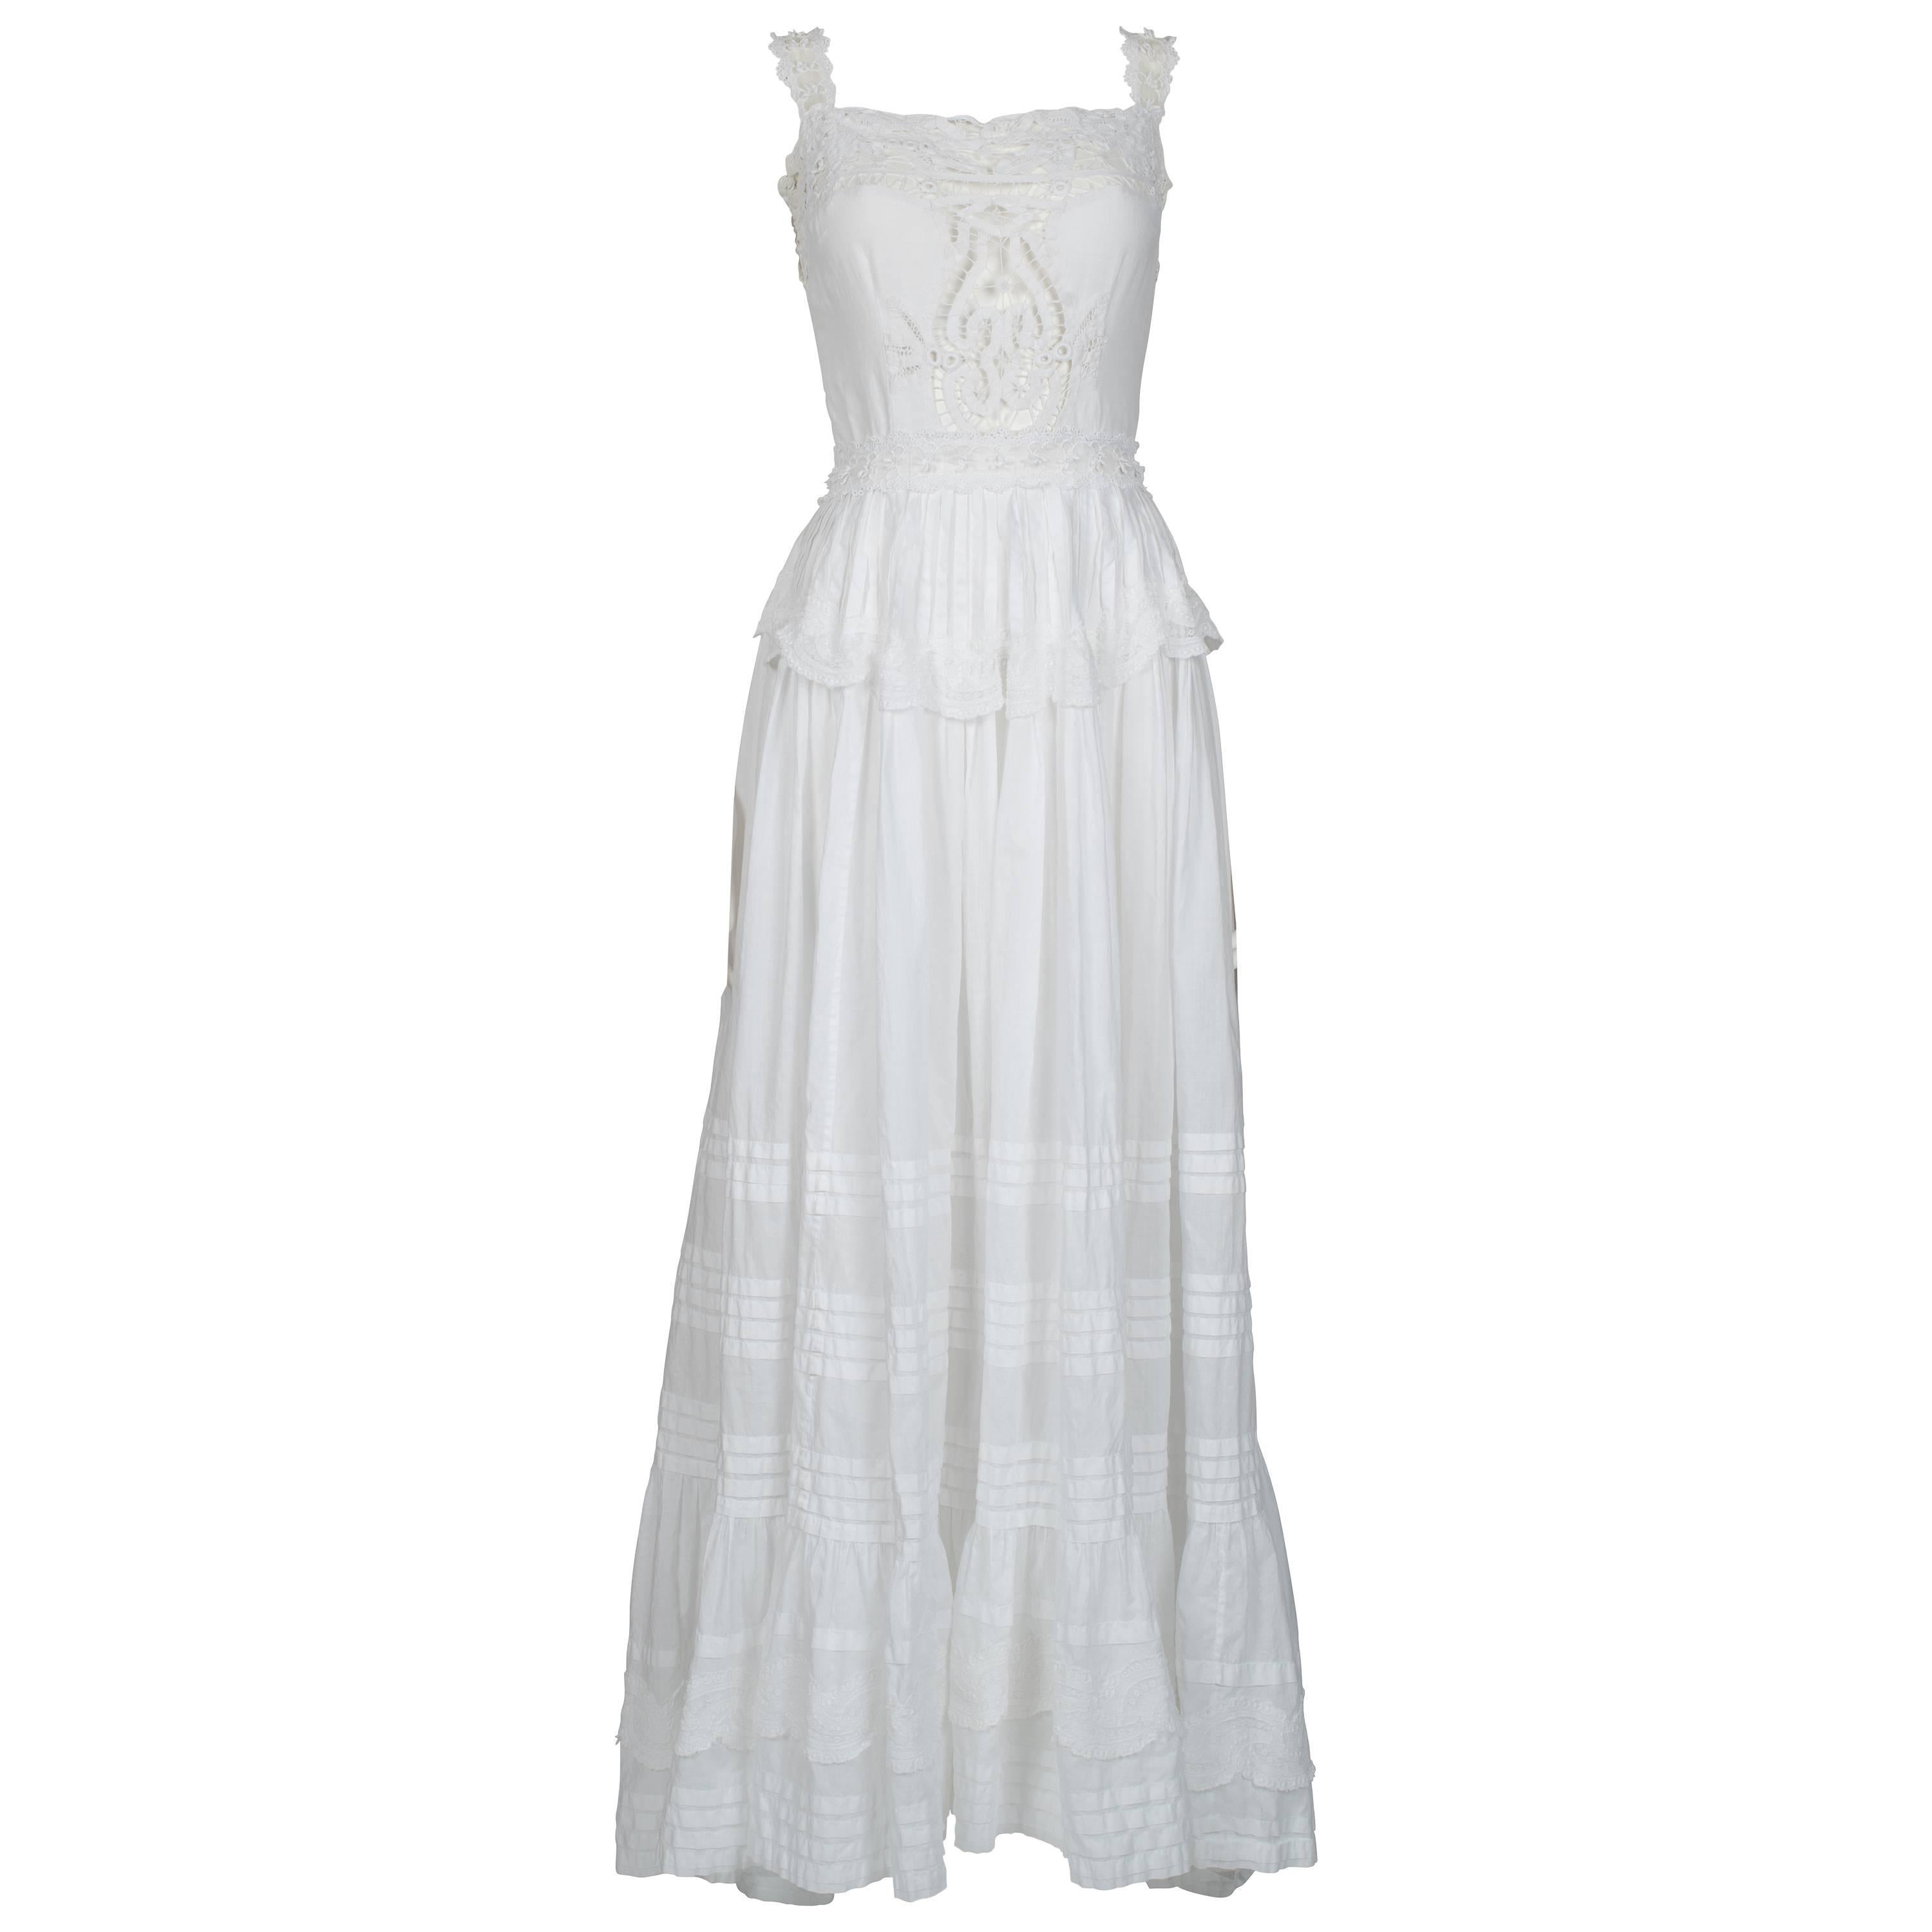 Theodora van Runkle Designed 'Victorian Style' Dress ca 1970 For Sale